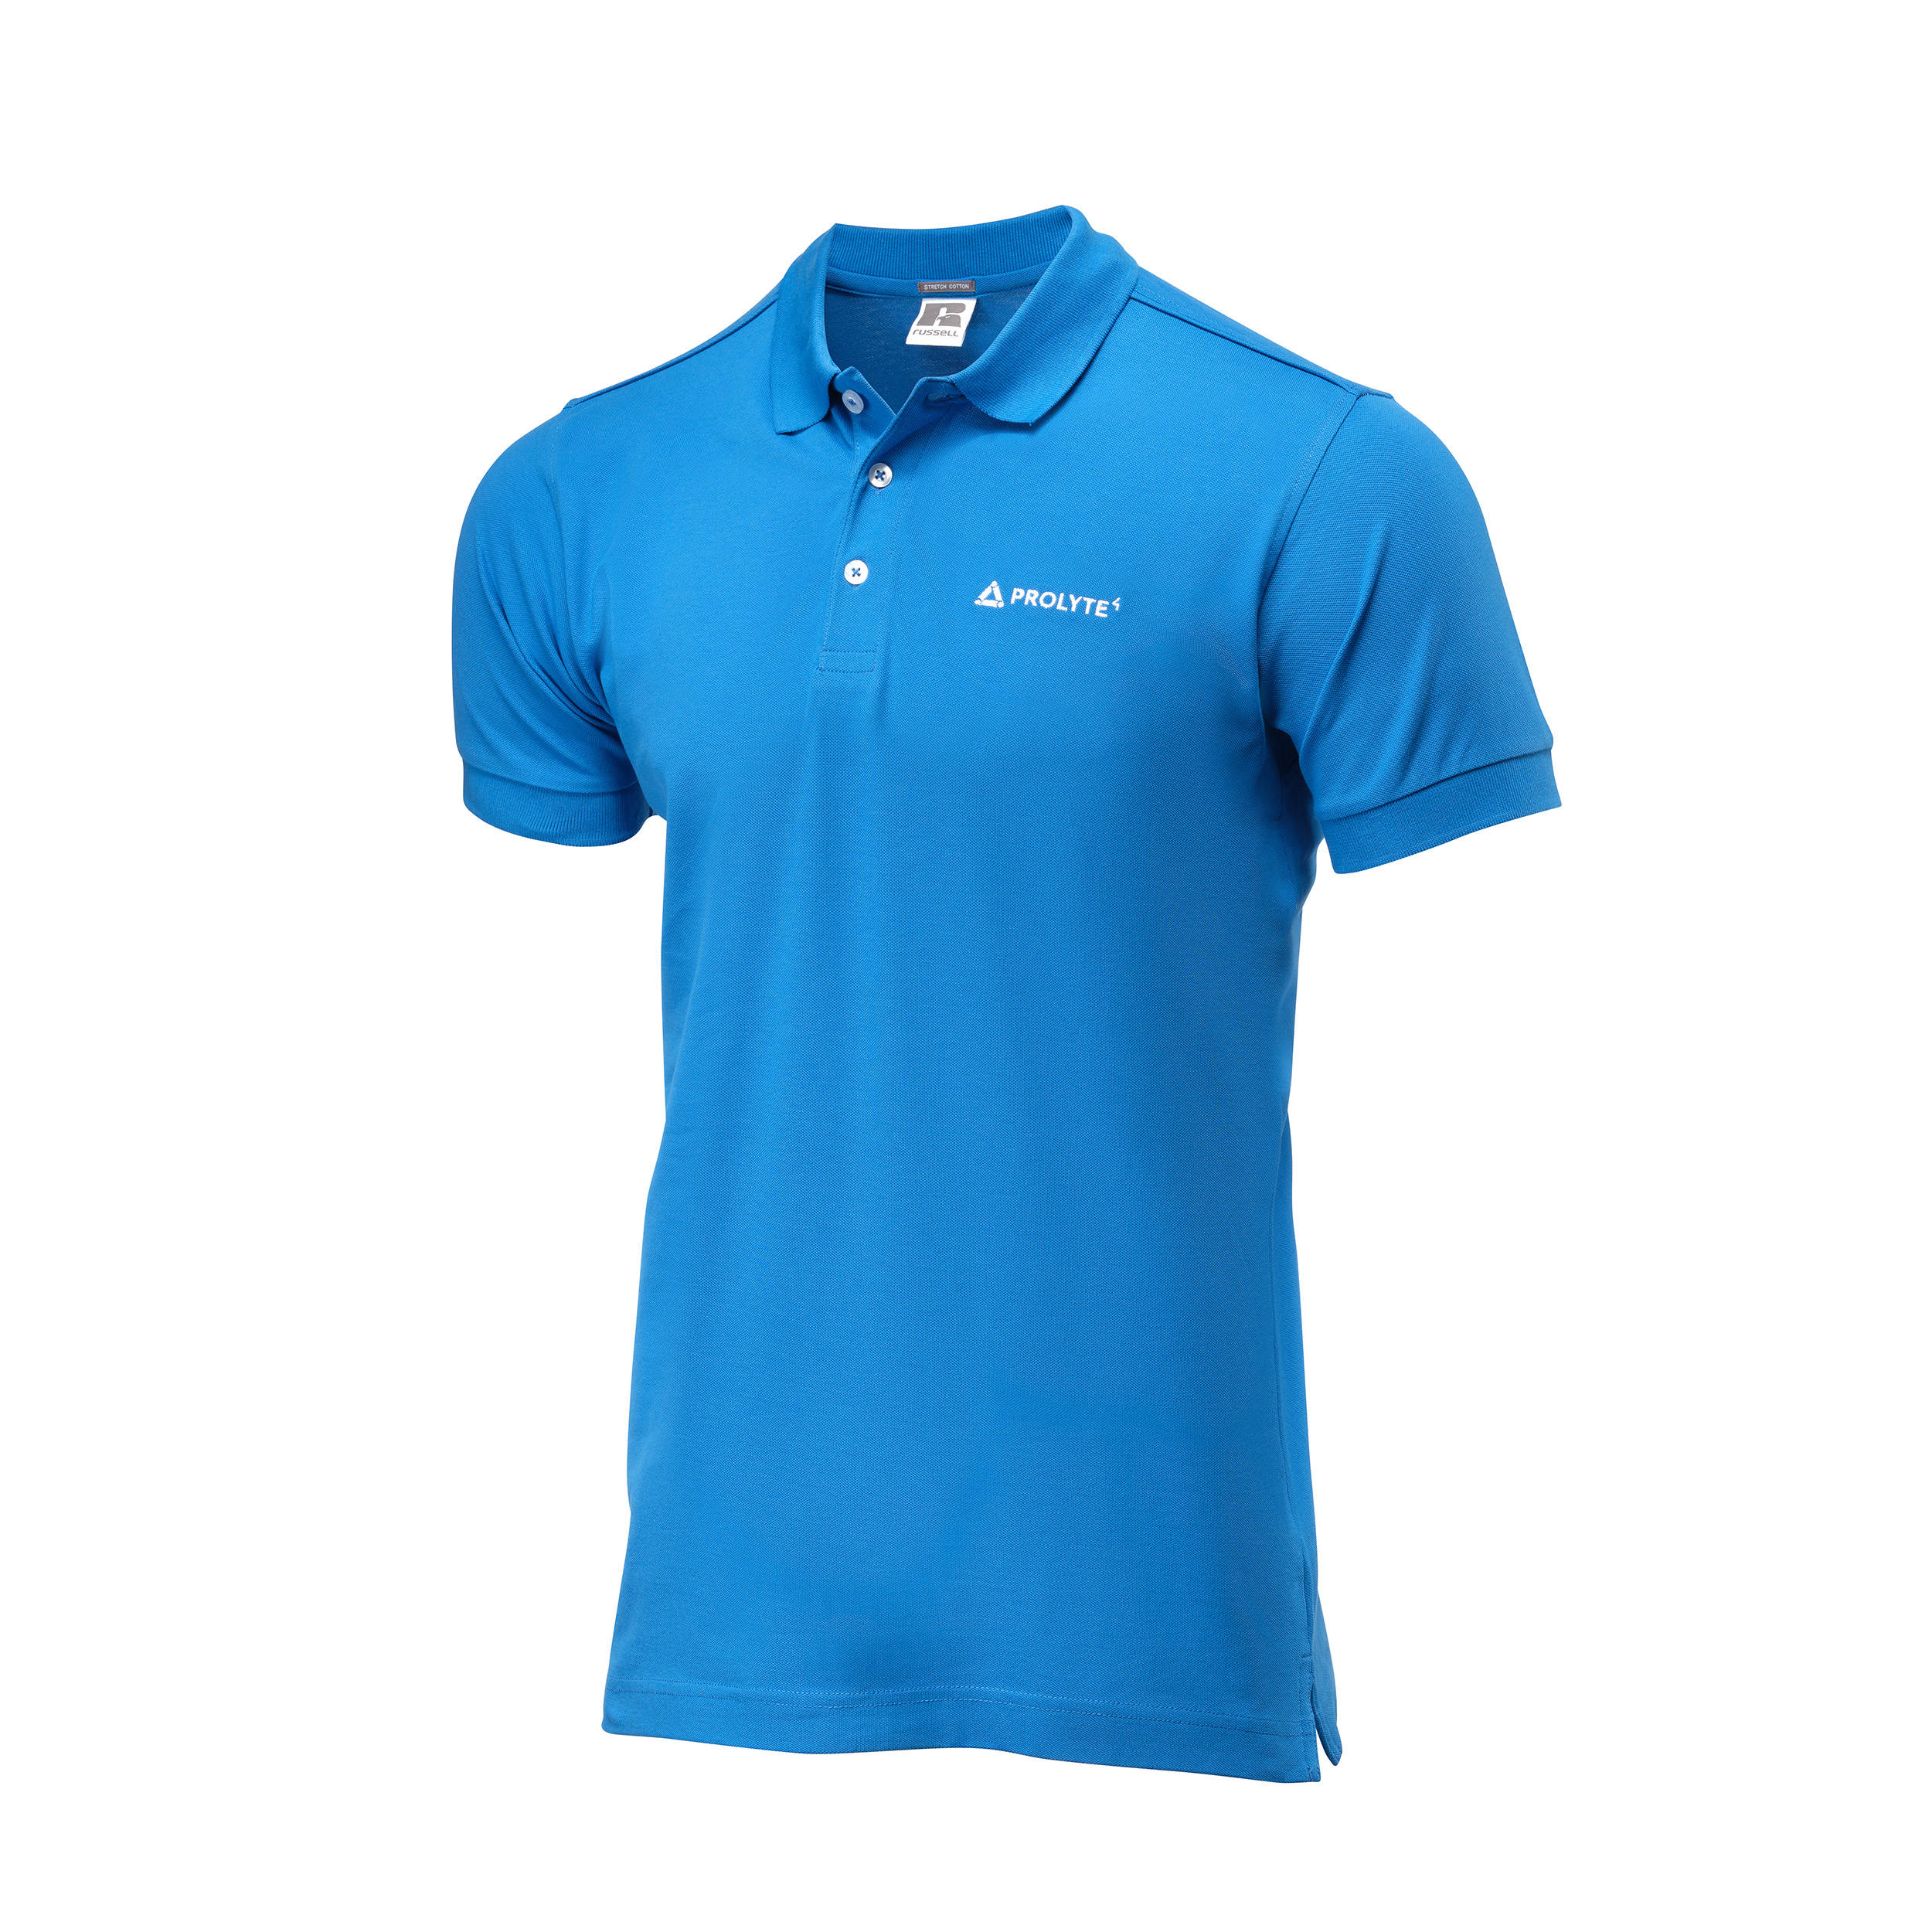 PROLYTE Polo shirt-blue